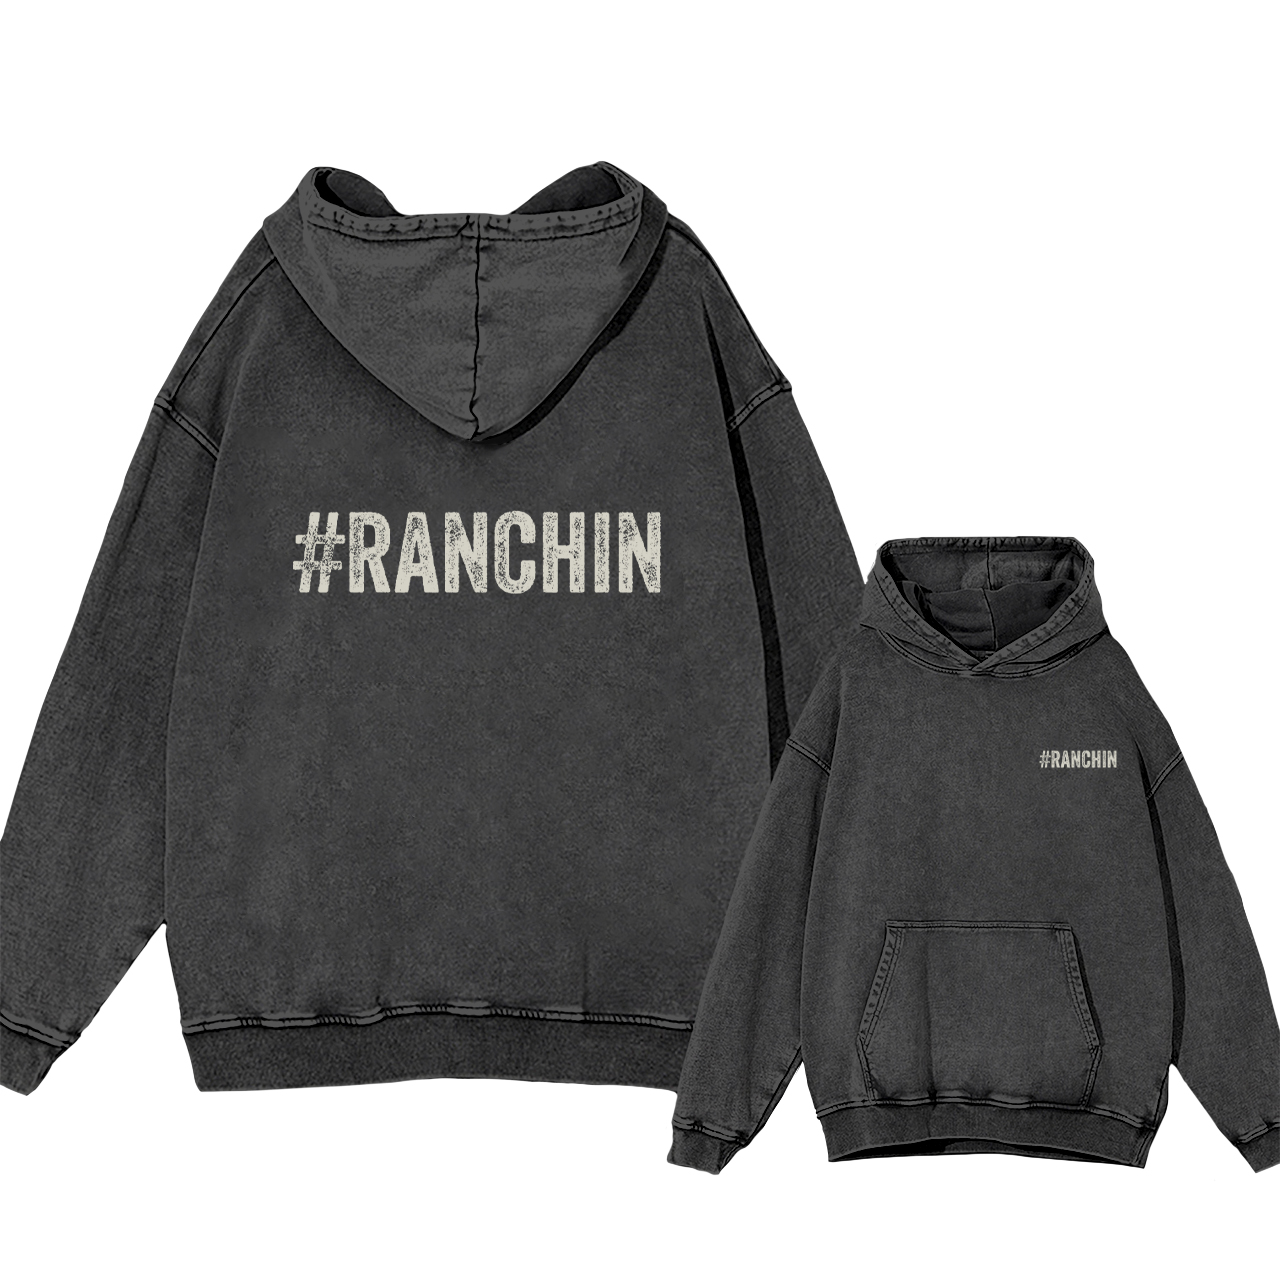 Rancher's Garment-Dye Hoodies